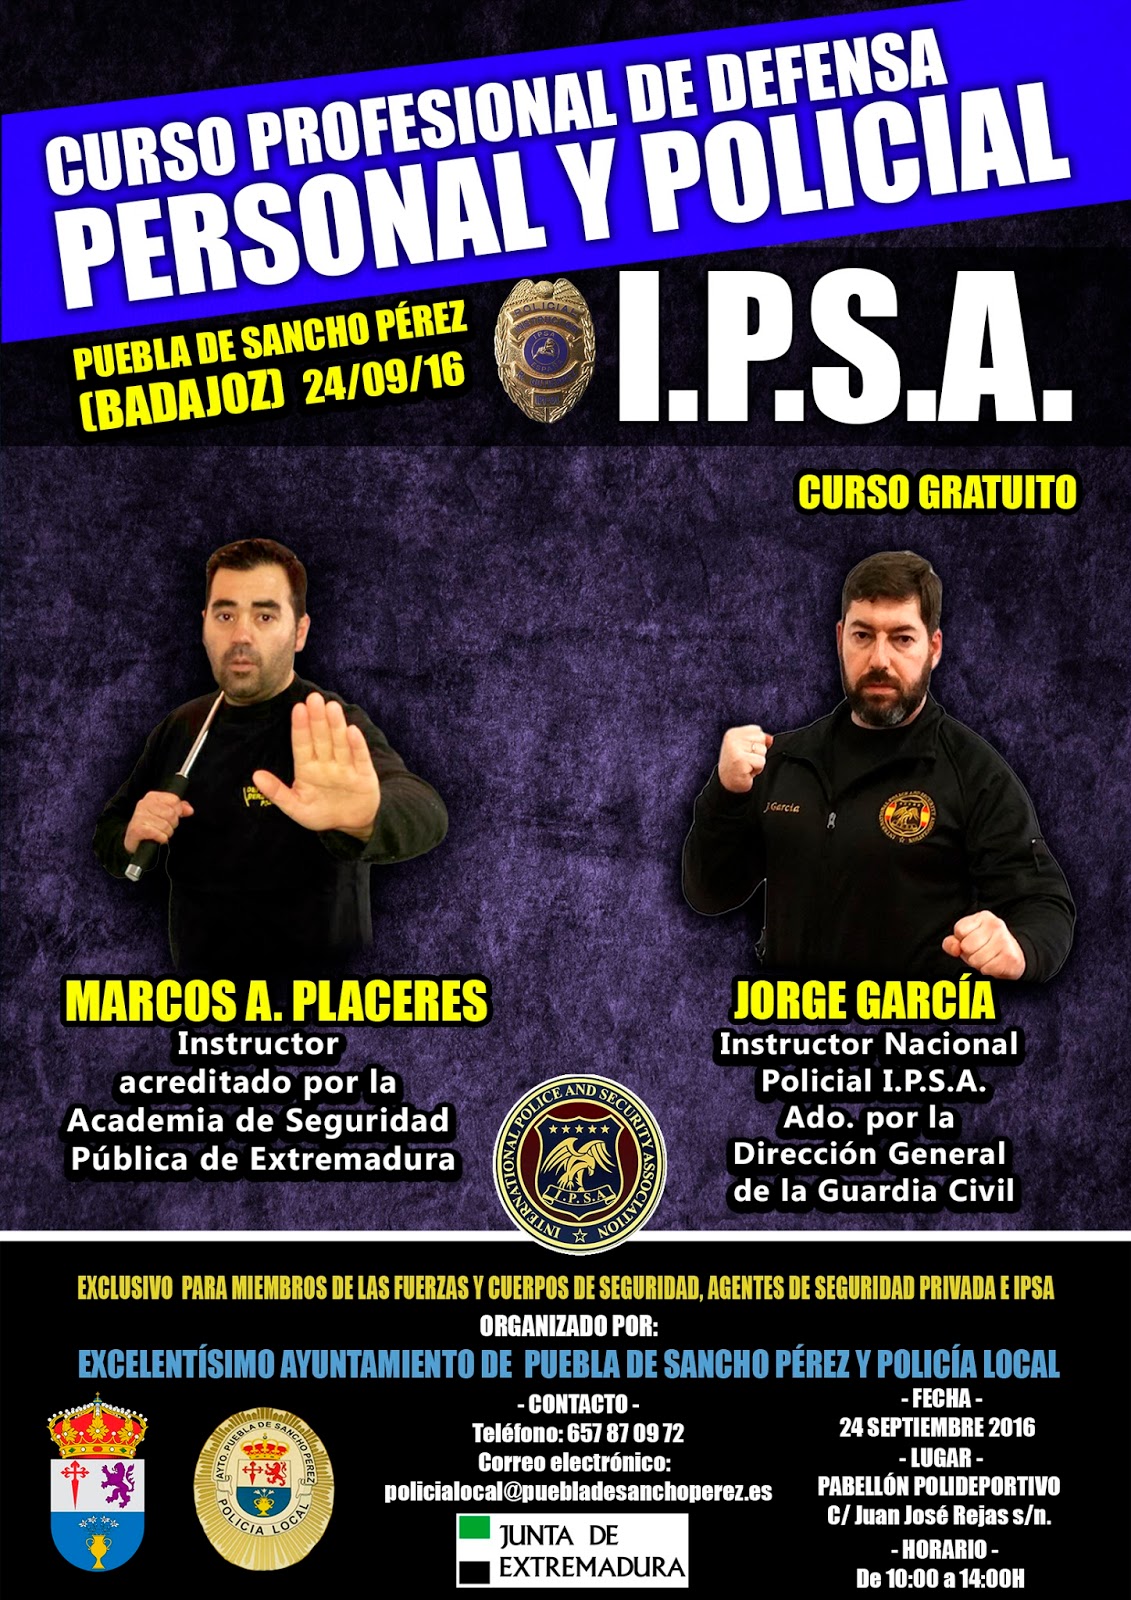 IPSA DEFENSA PERSONAL POLICIAL CURSO I.P.S.A. SEMINARIO GUARDIA CIVIL POLICIA MILITAR PENITENCIARIA SEGURIDAD ASOCIACION INTERNACIONAL IPSA INTERNATIONAL POLICE AND SECURITY ASSOCIATION IPSA INTERNACIONAL CURSOS SEMINARIOS